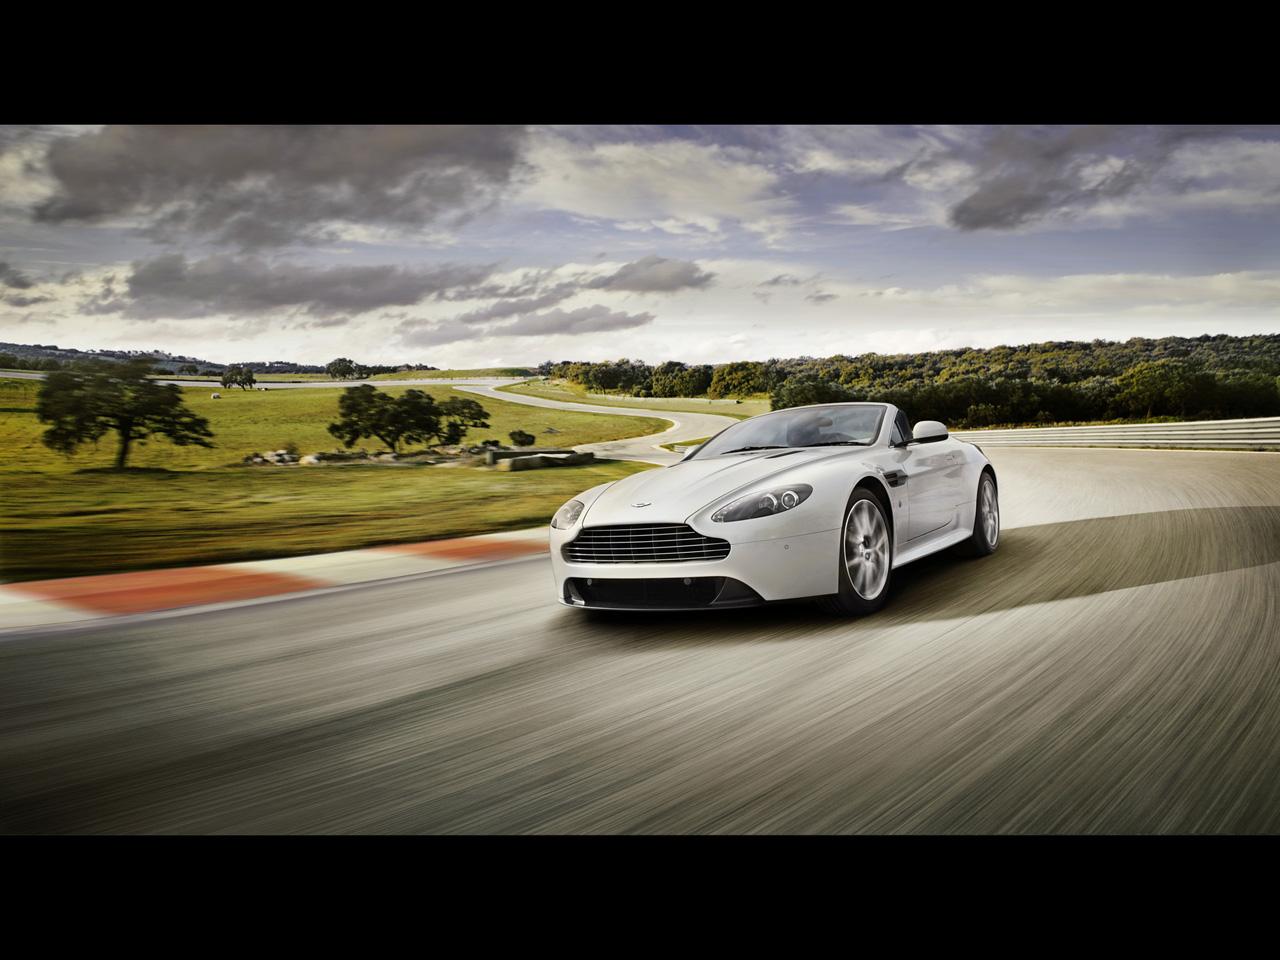 Aston Martin Vantage at 1024 x 1024 iPad size wallpapers HD quality